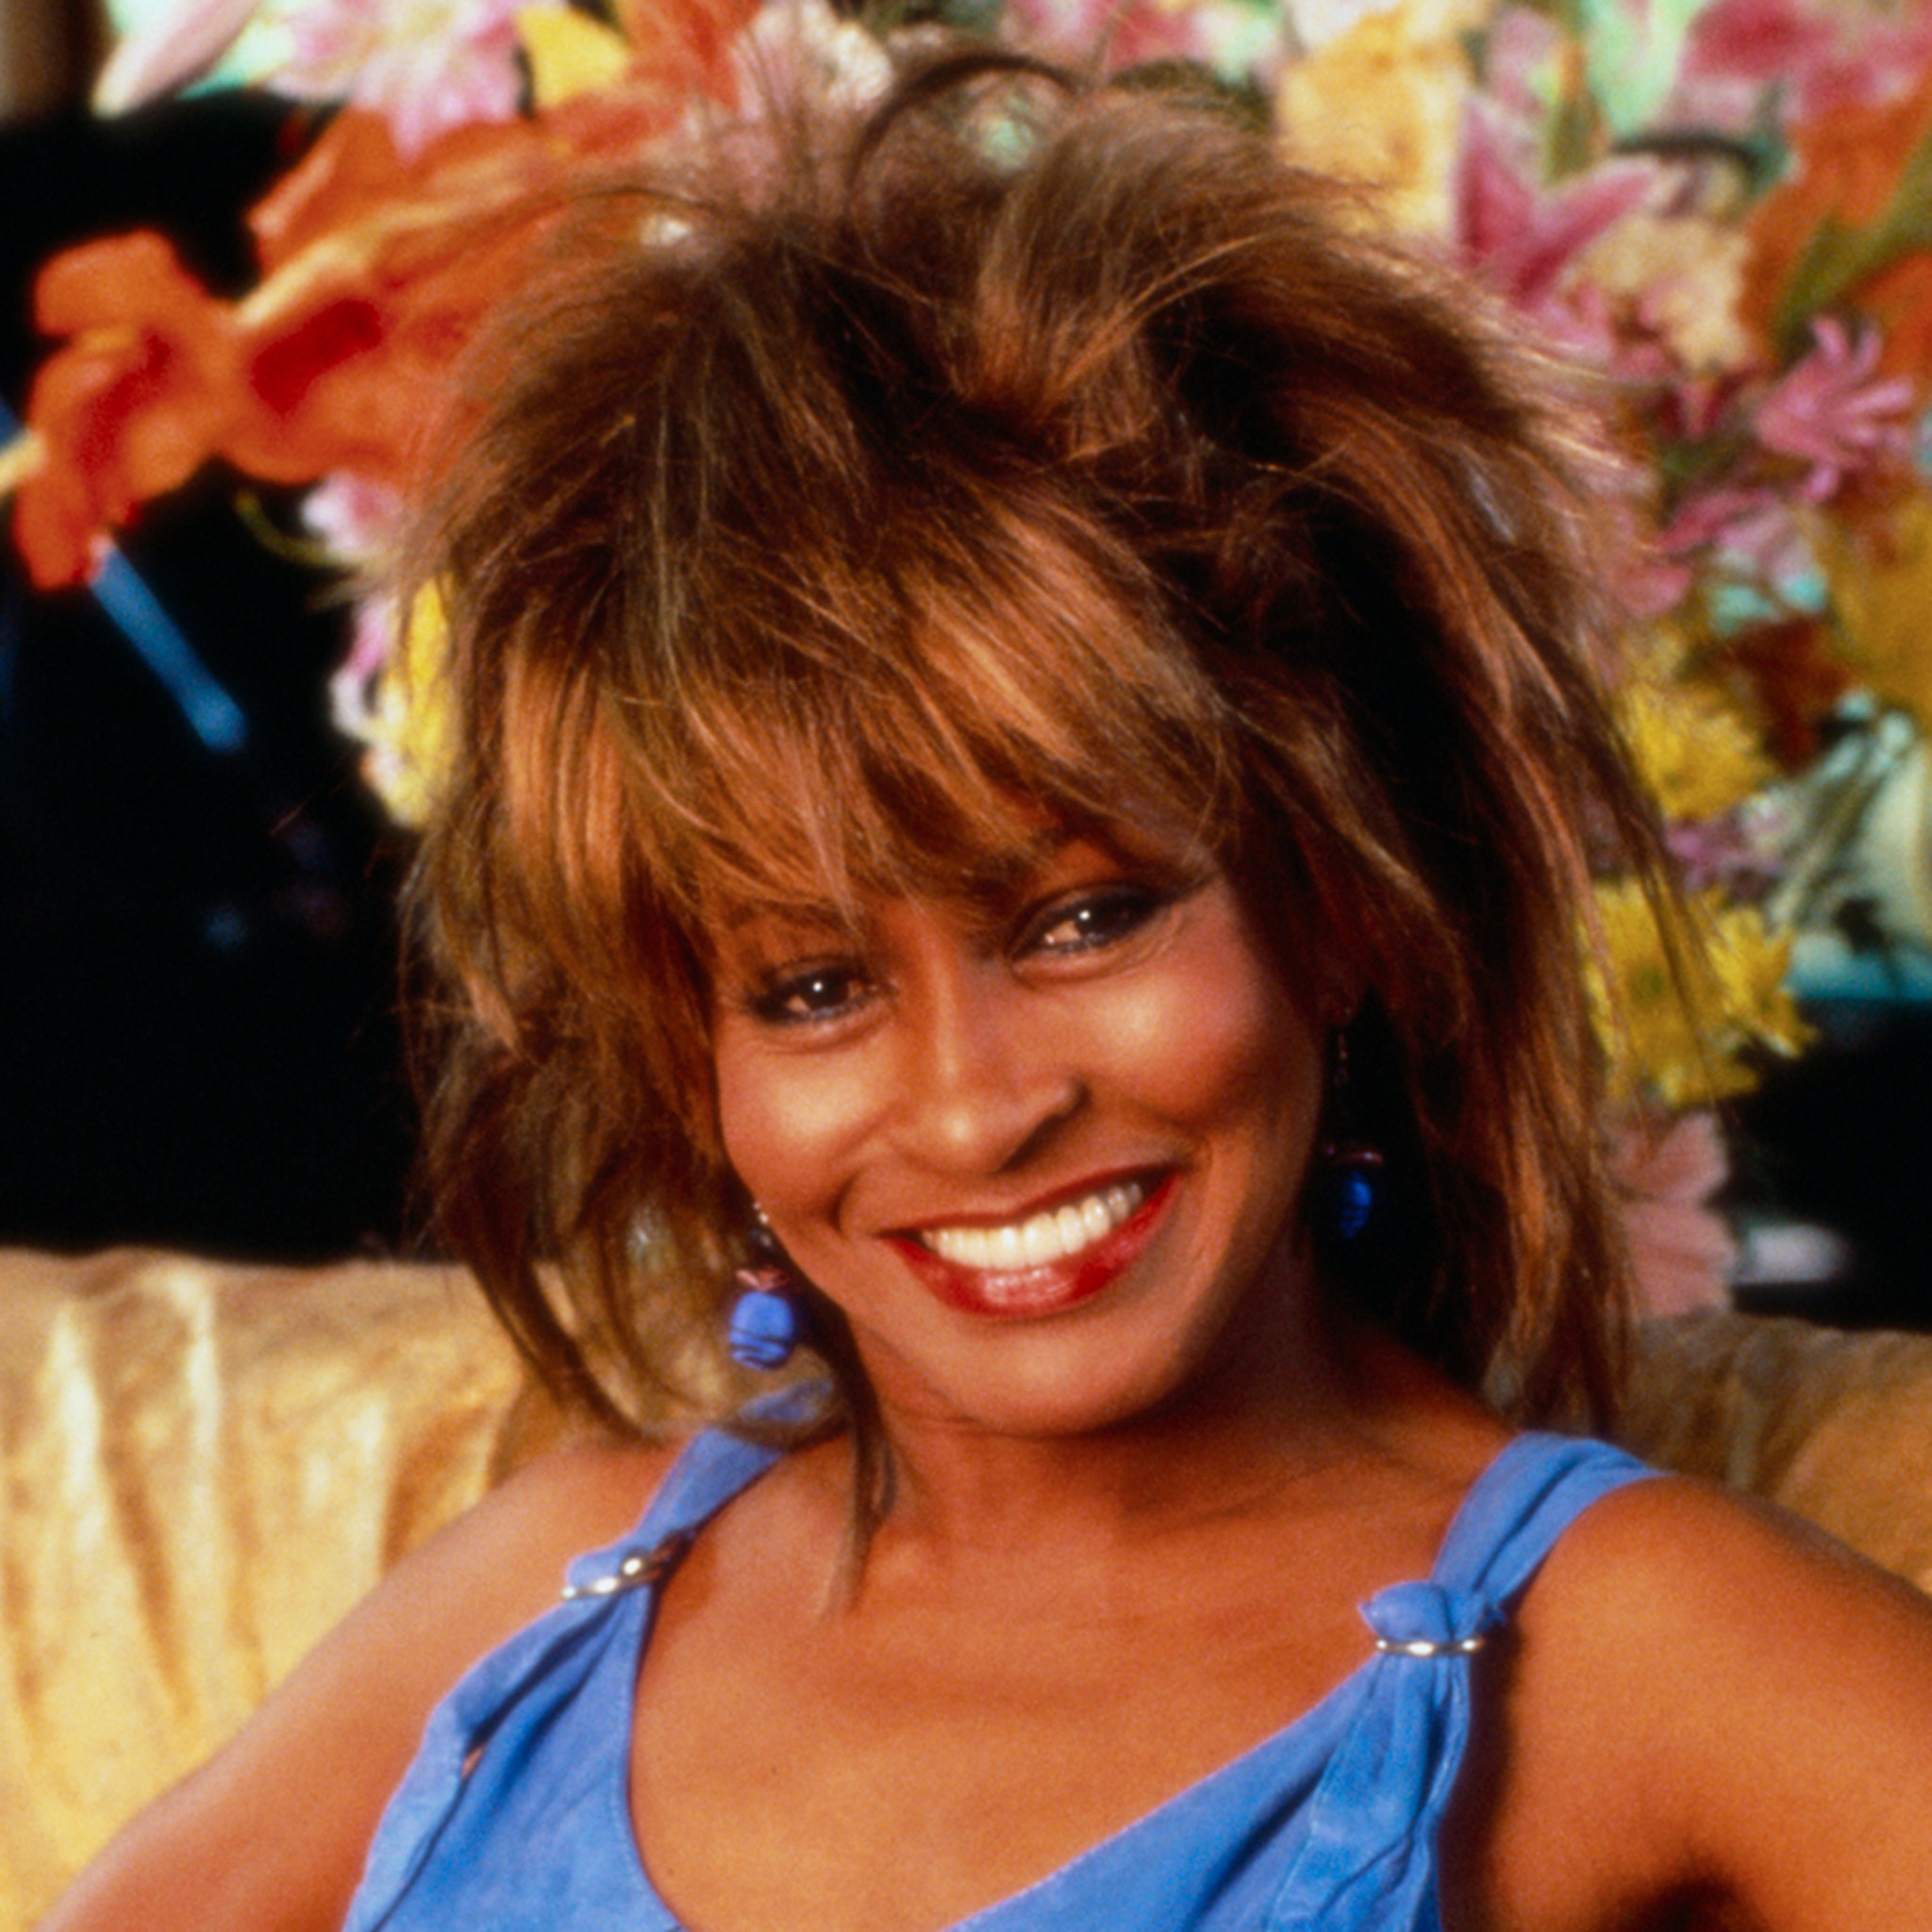 Tina Turner, 'Queen of Rock 'n' Roll,' Dead at 83 'TMZ' News